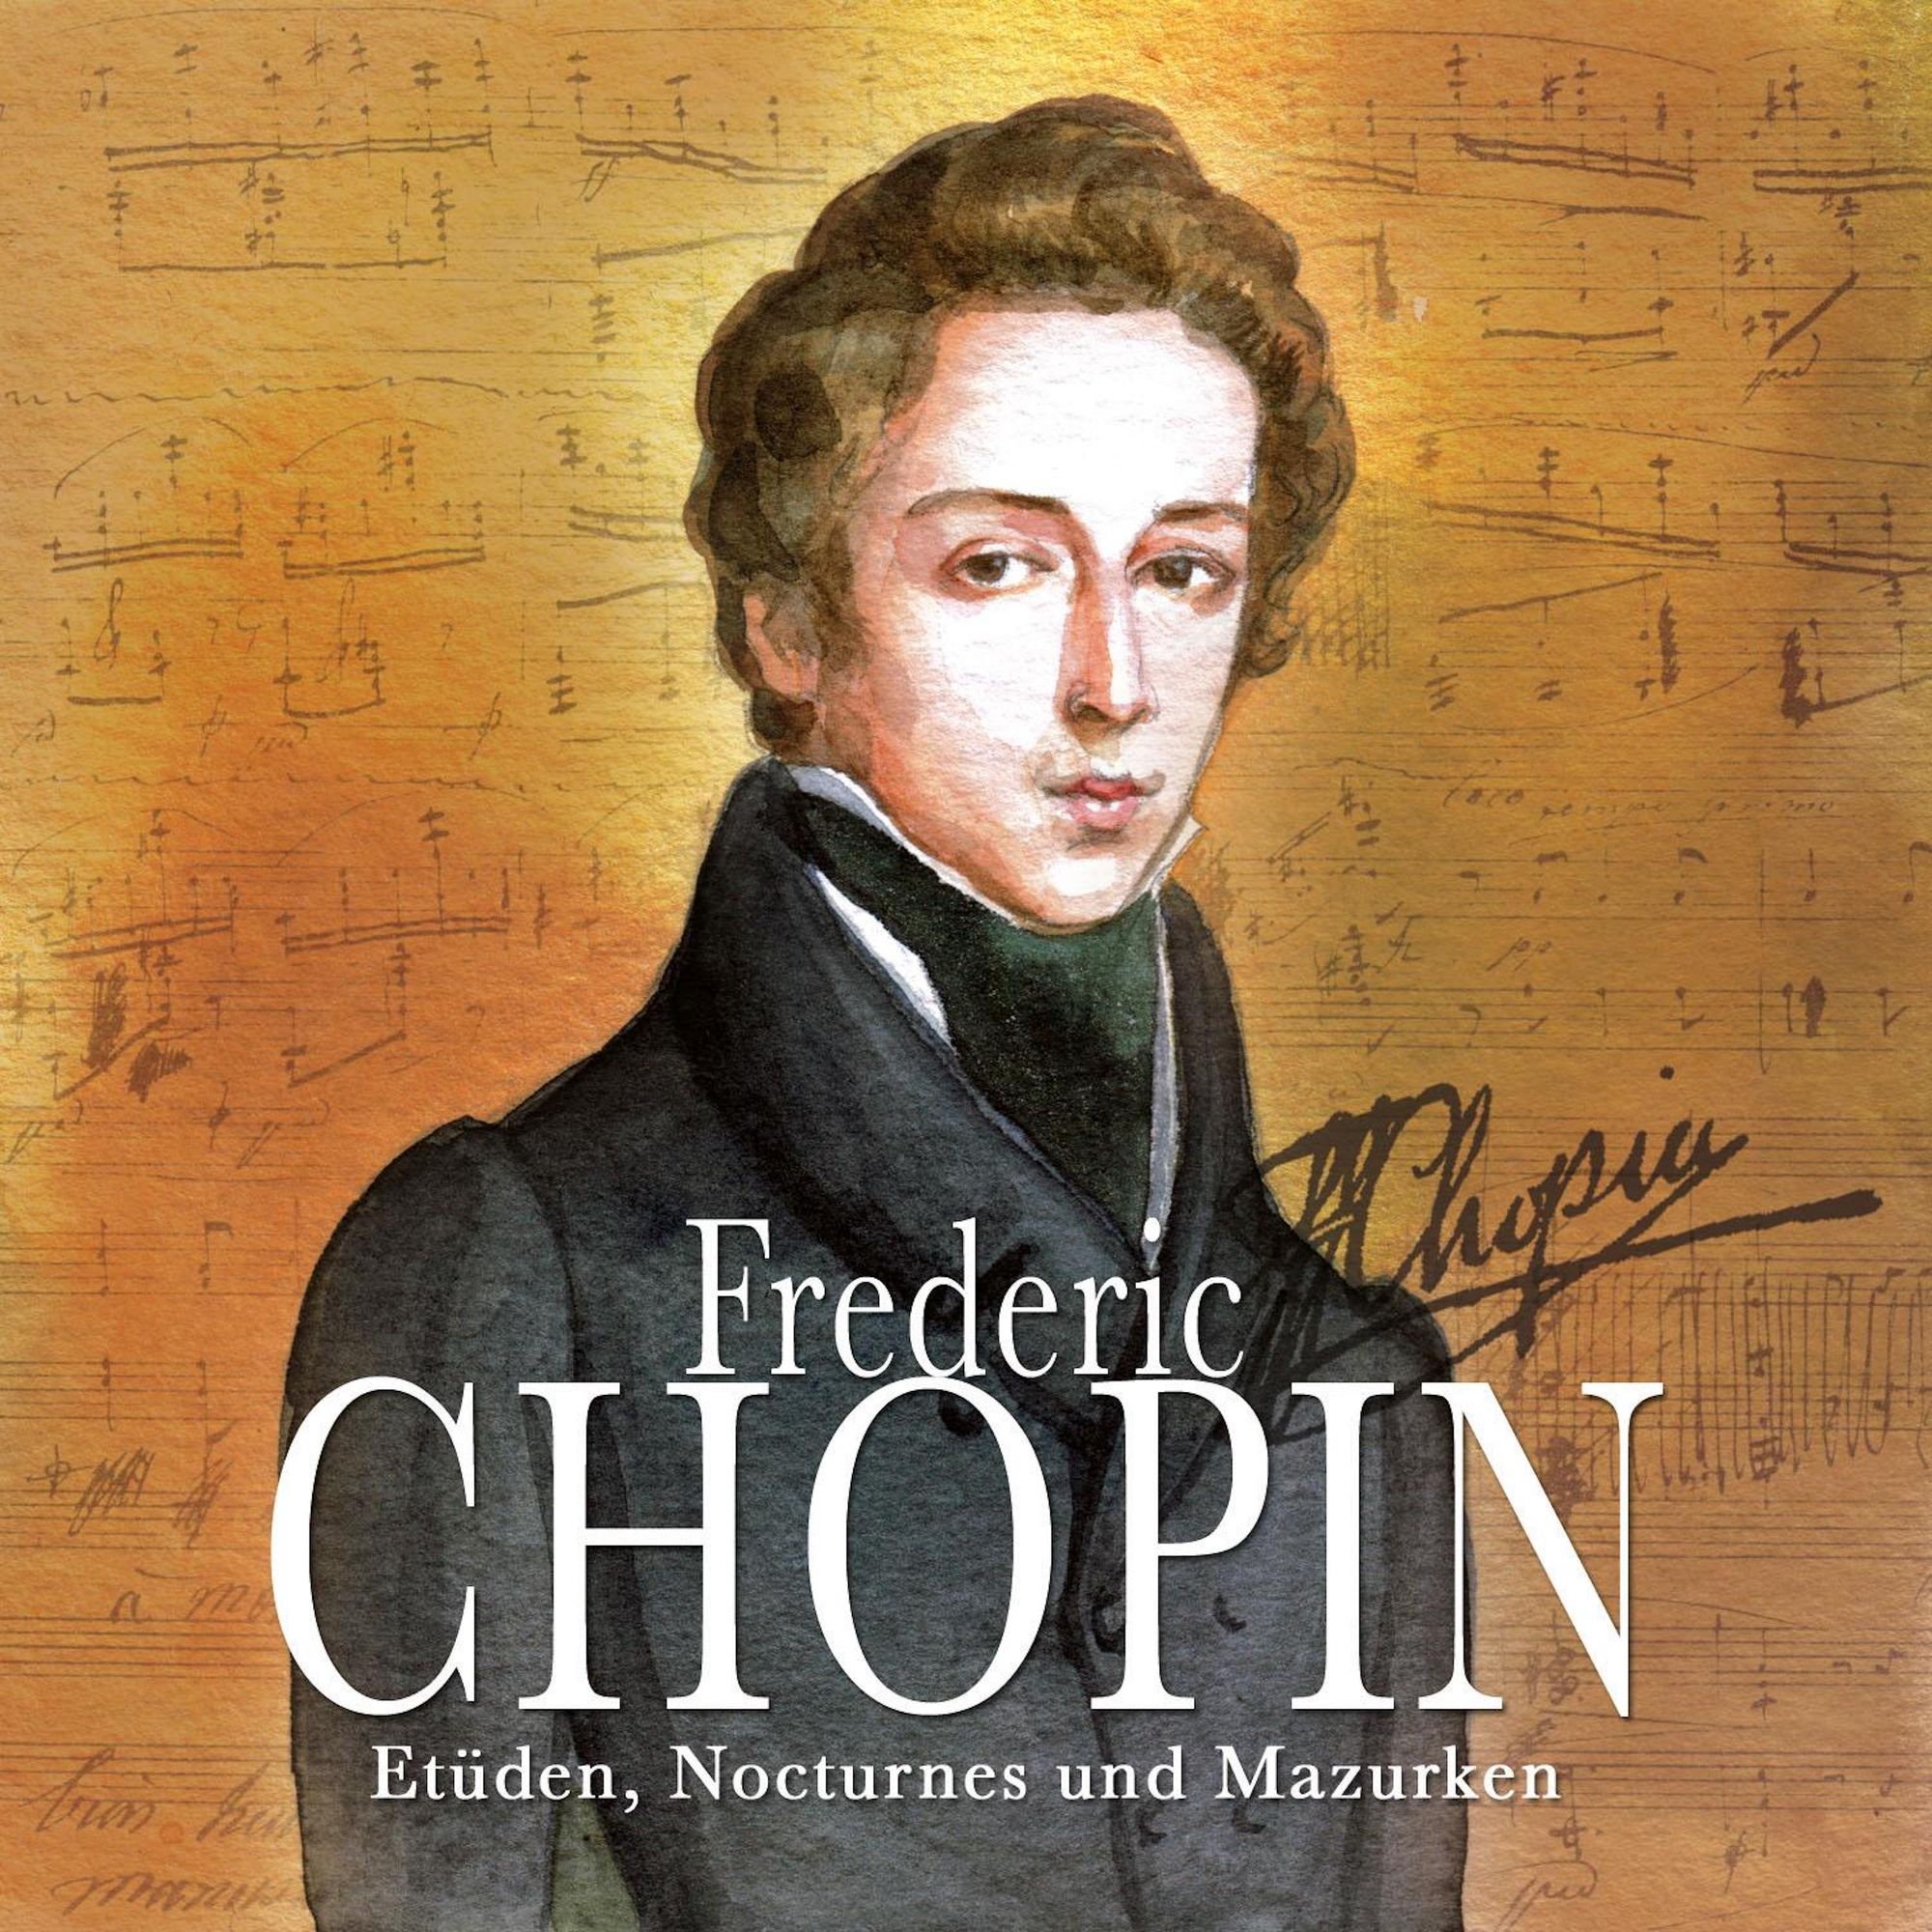 Слушать музыку шопена без остановки. Фредерик Шопен (1810-1849). Шопен композитор. Fryderyk Chopin 1810-1849.